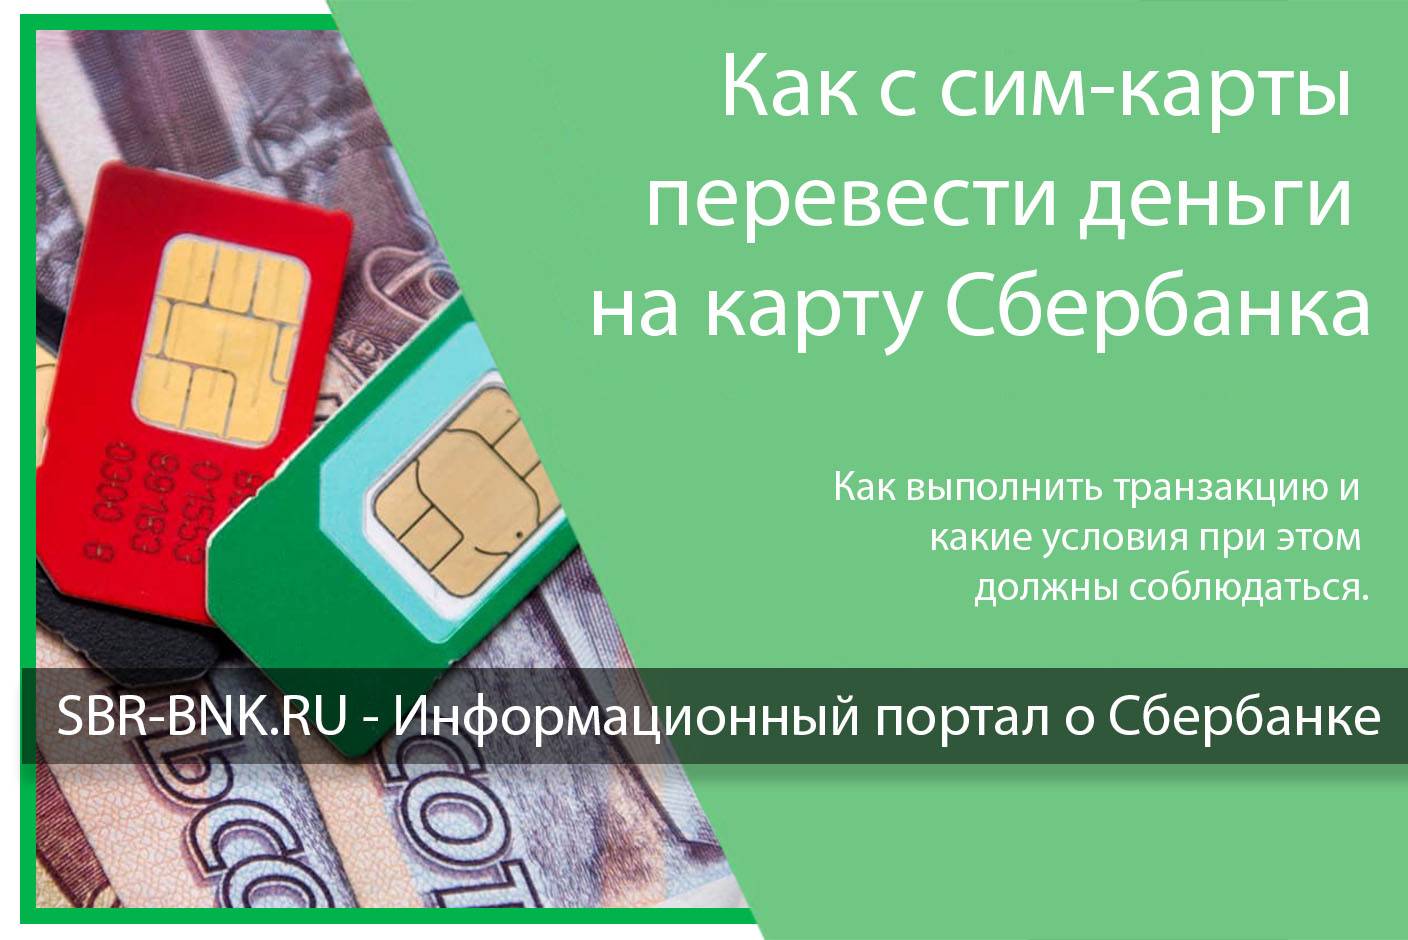 Как перевести деньги с телефона (мтс, теле2, билайн, мегафон) на карту сбербанк?